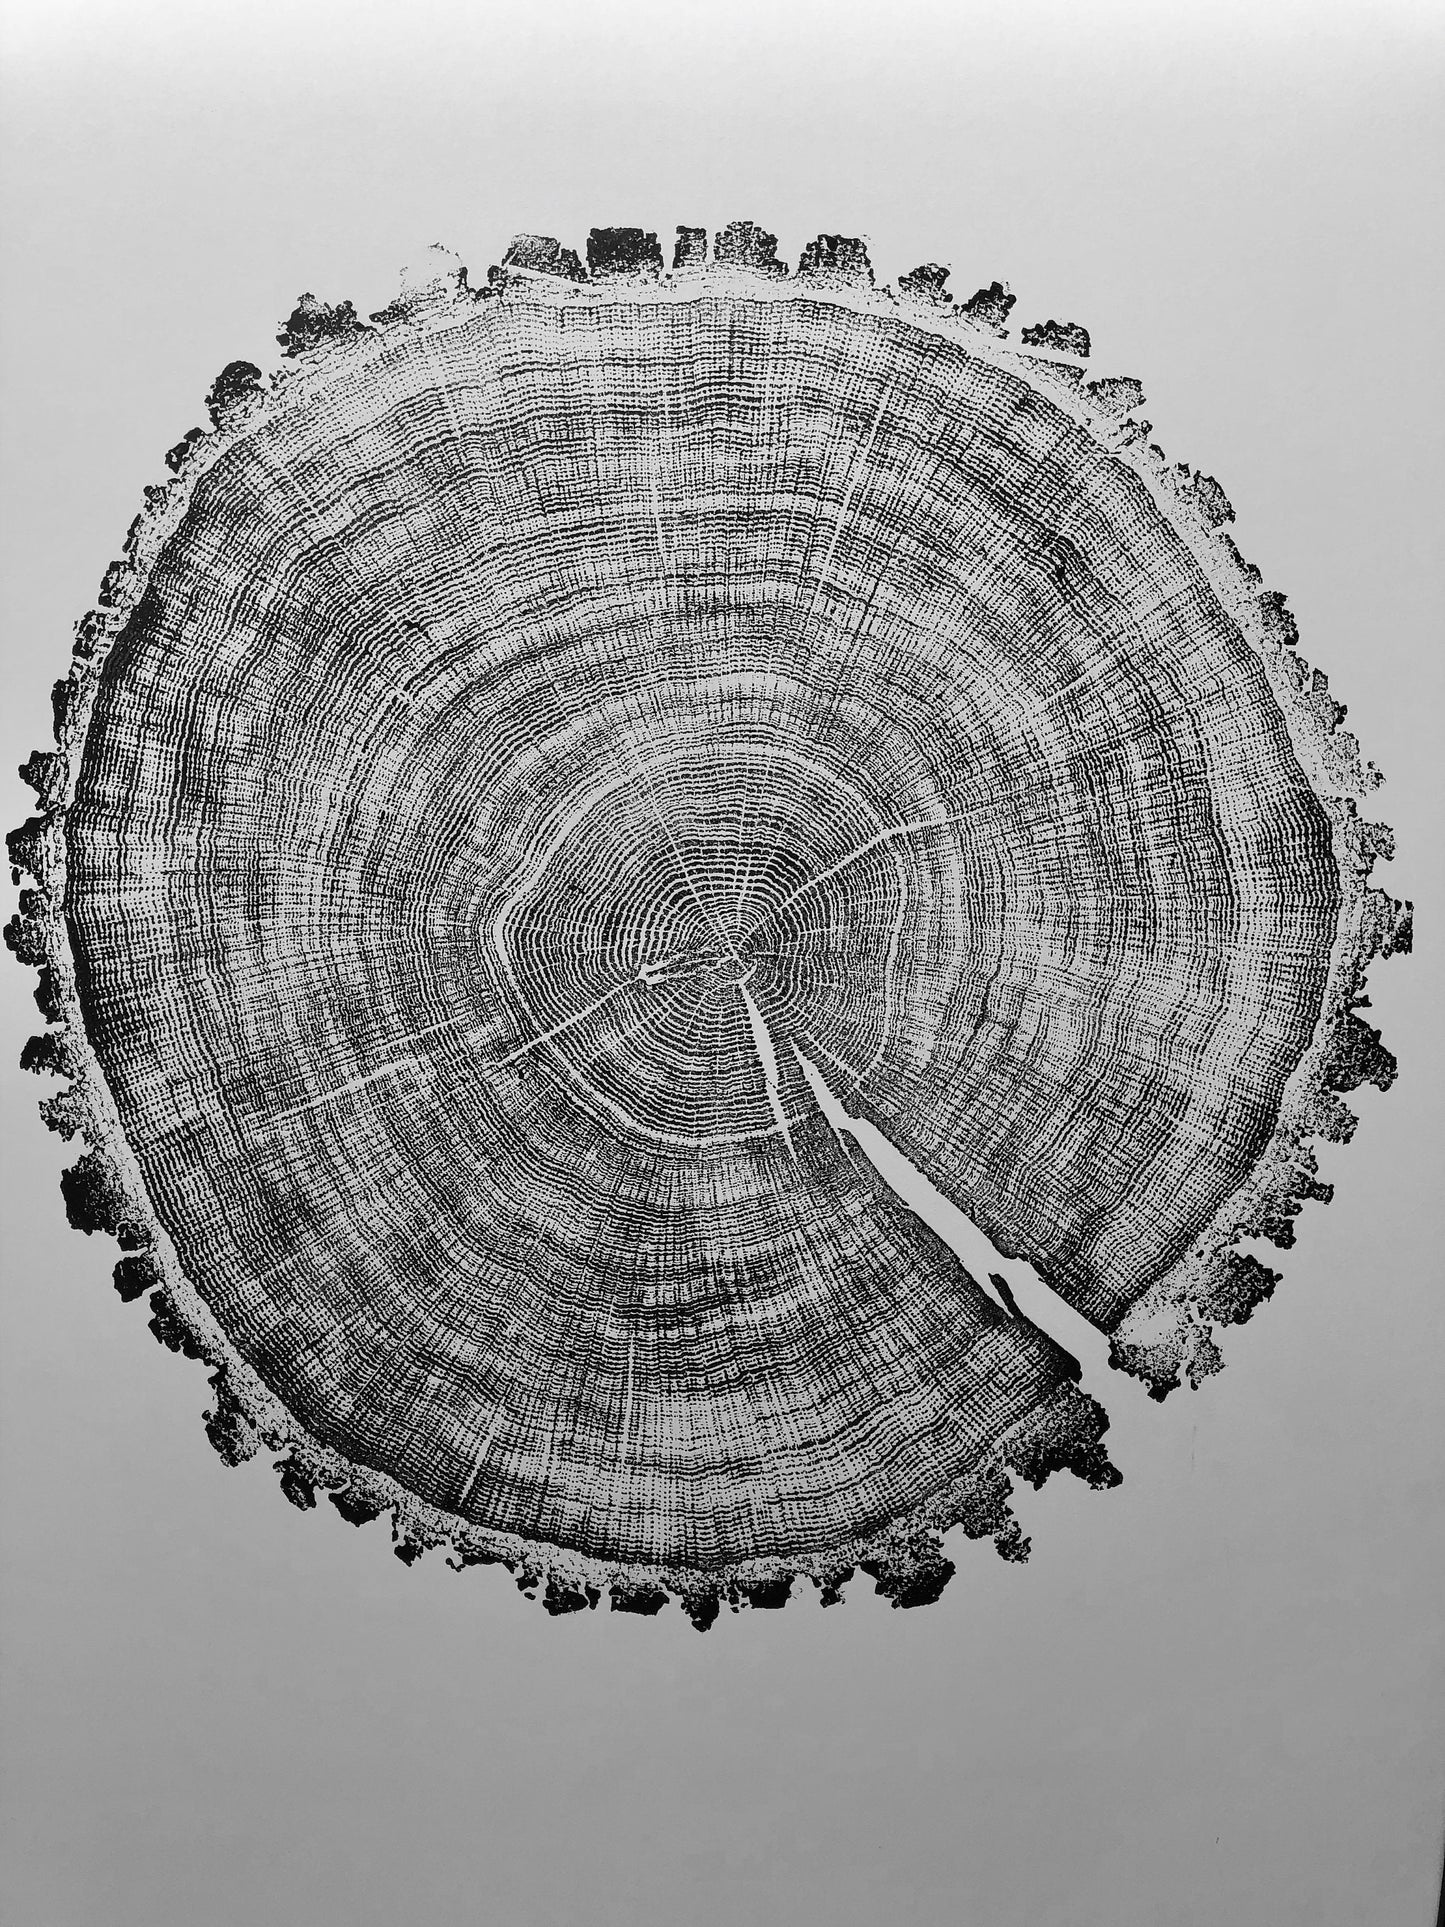 Oak, Pine, & Hemlock Set of 4 - 24x36 each print